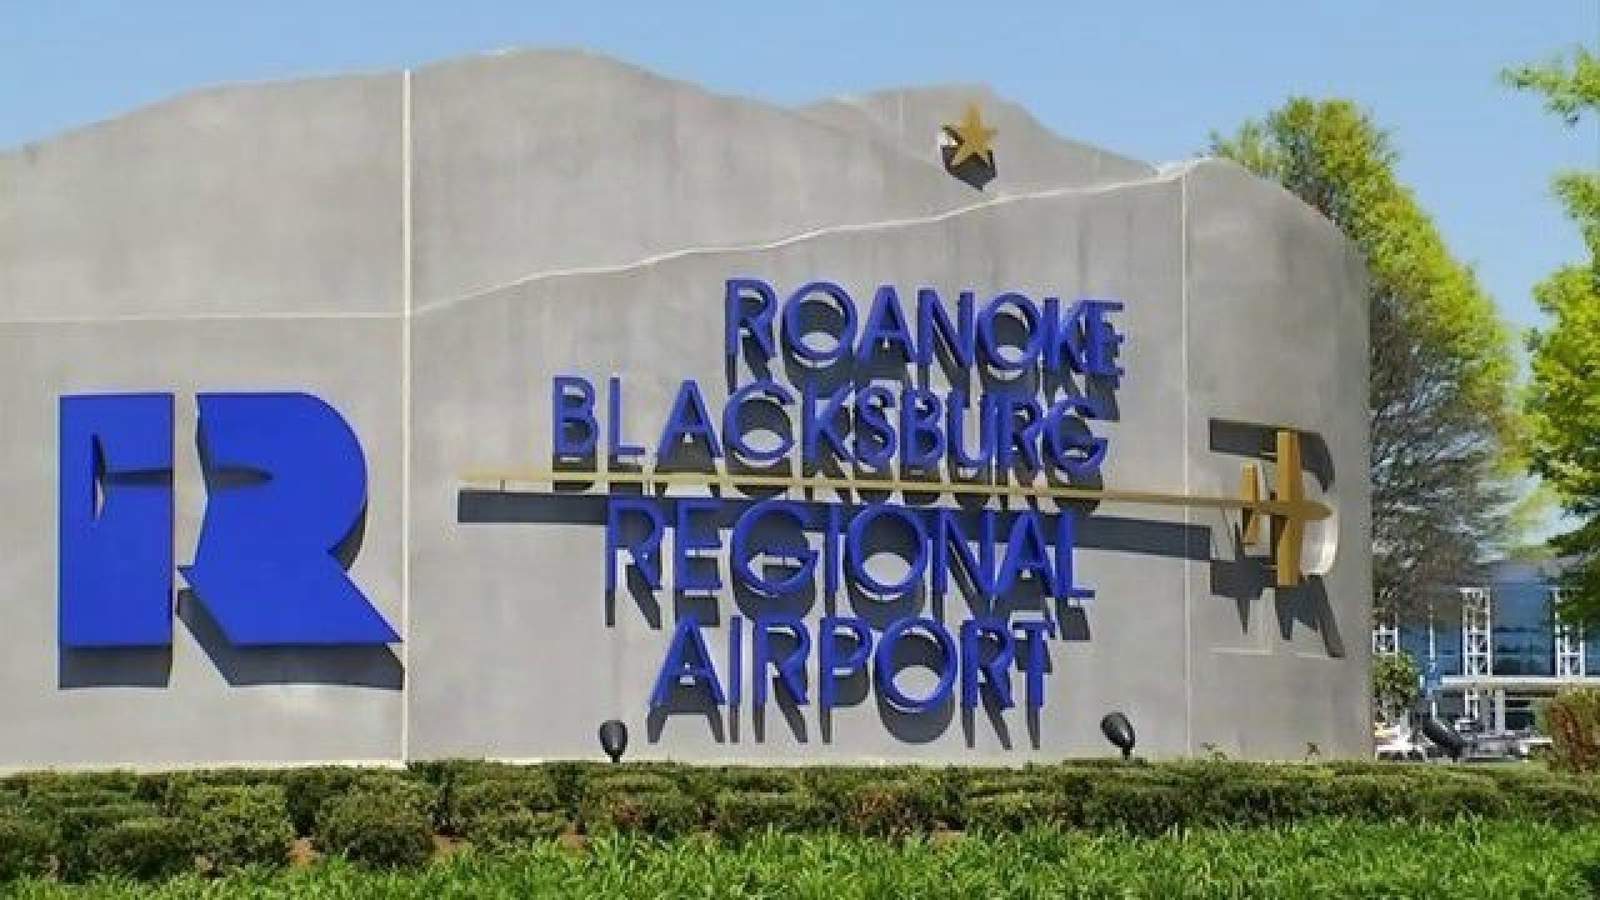 Roanoke airport continues seeing upward trend